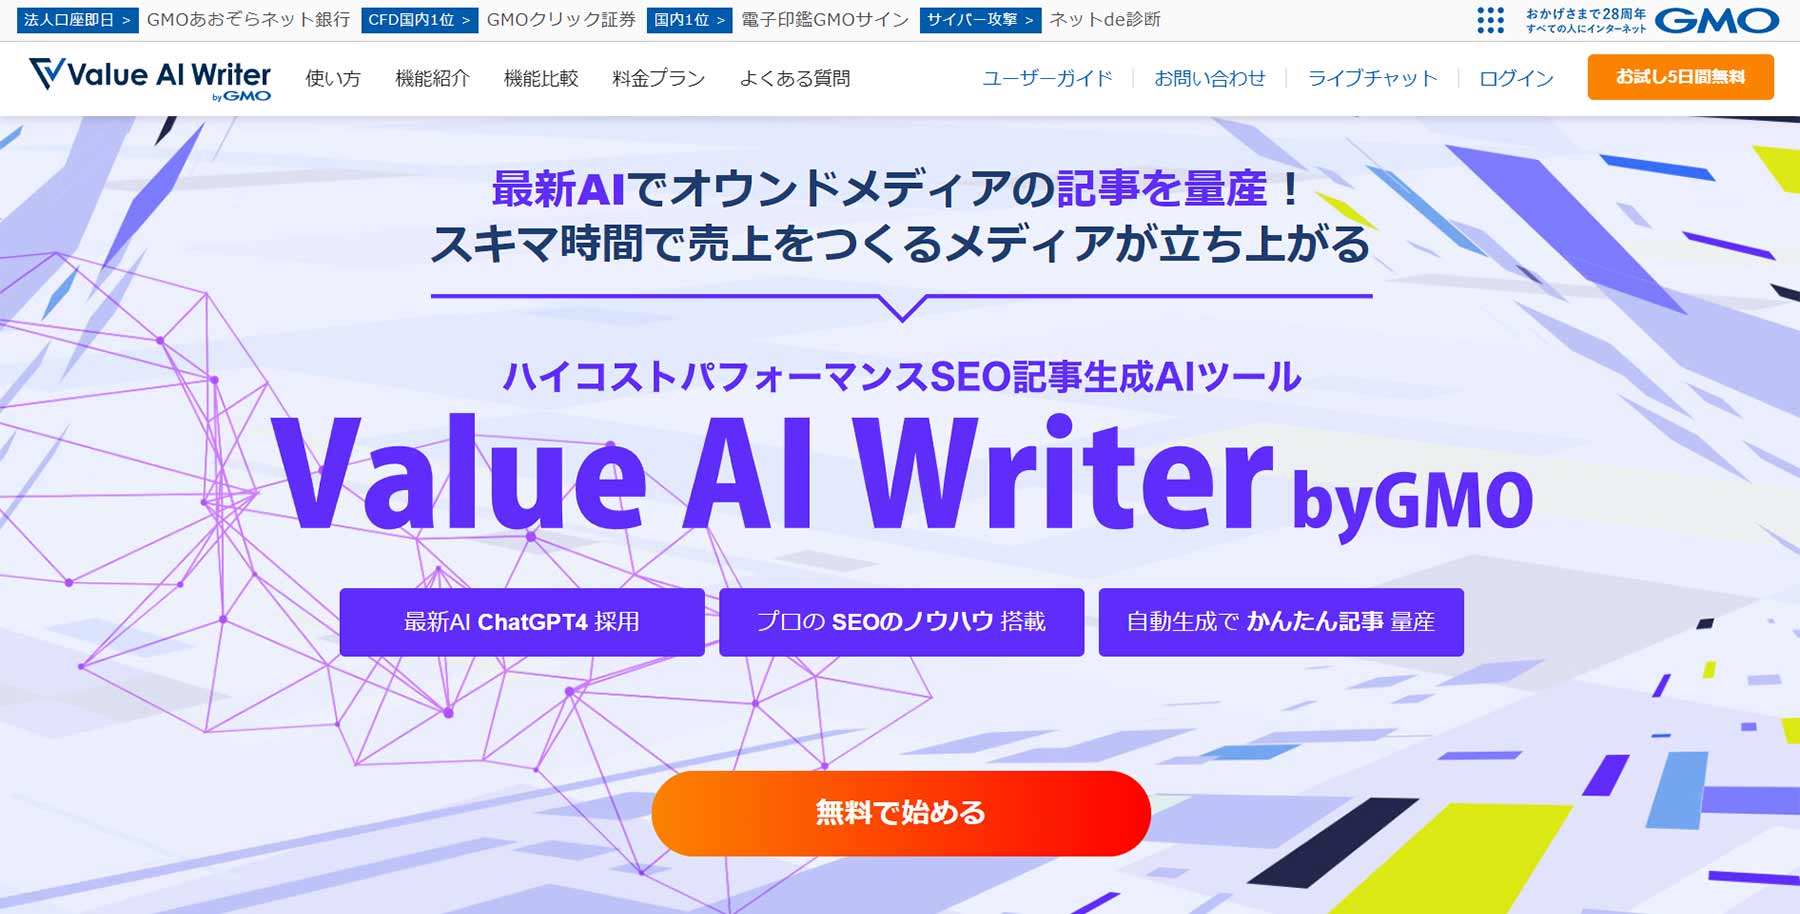 Value AI Writer byGMO公式Webサイト
